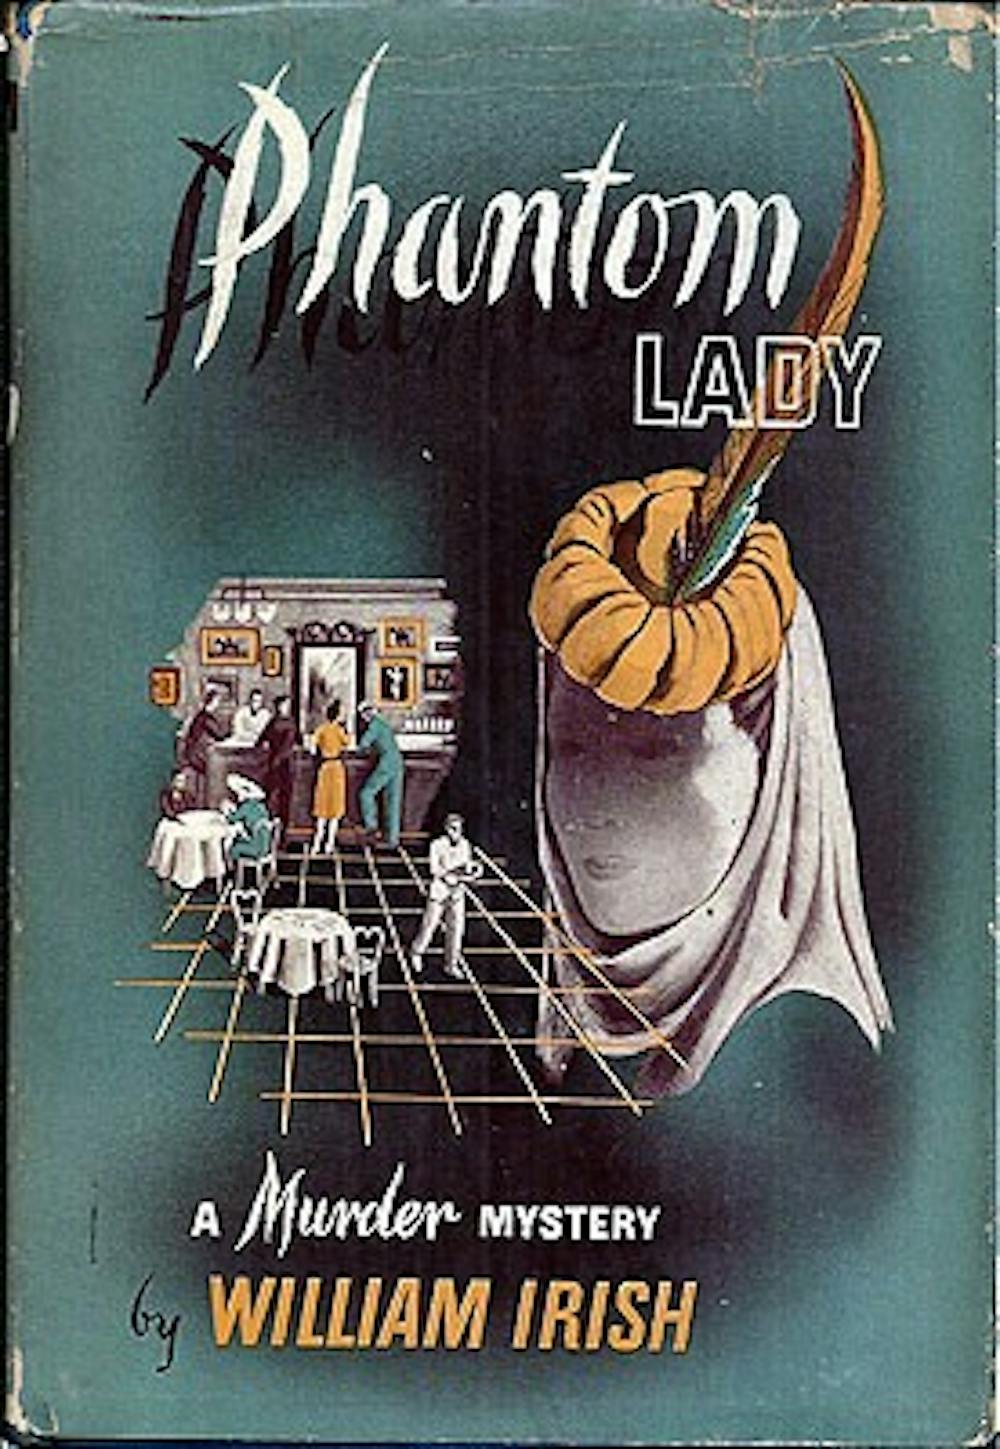 ‘Phantom Lady’ novel stands test of time